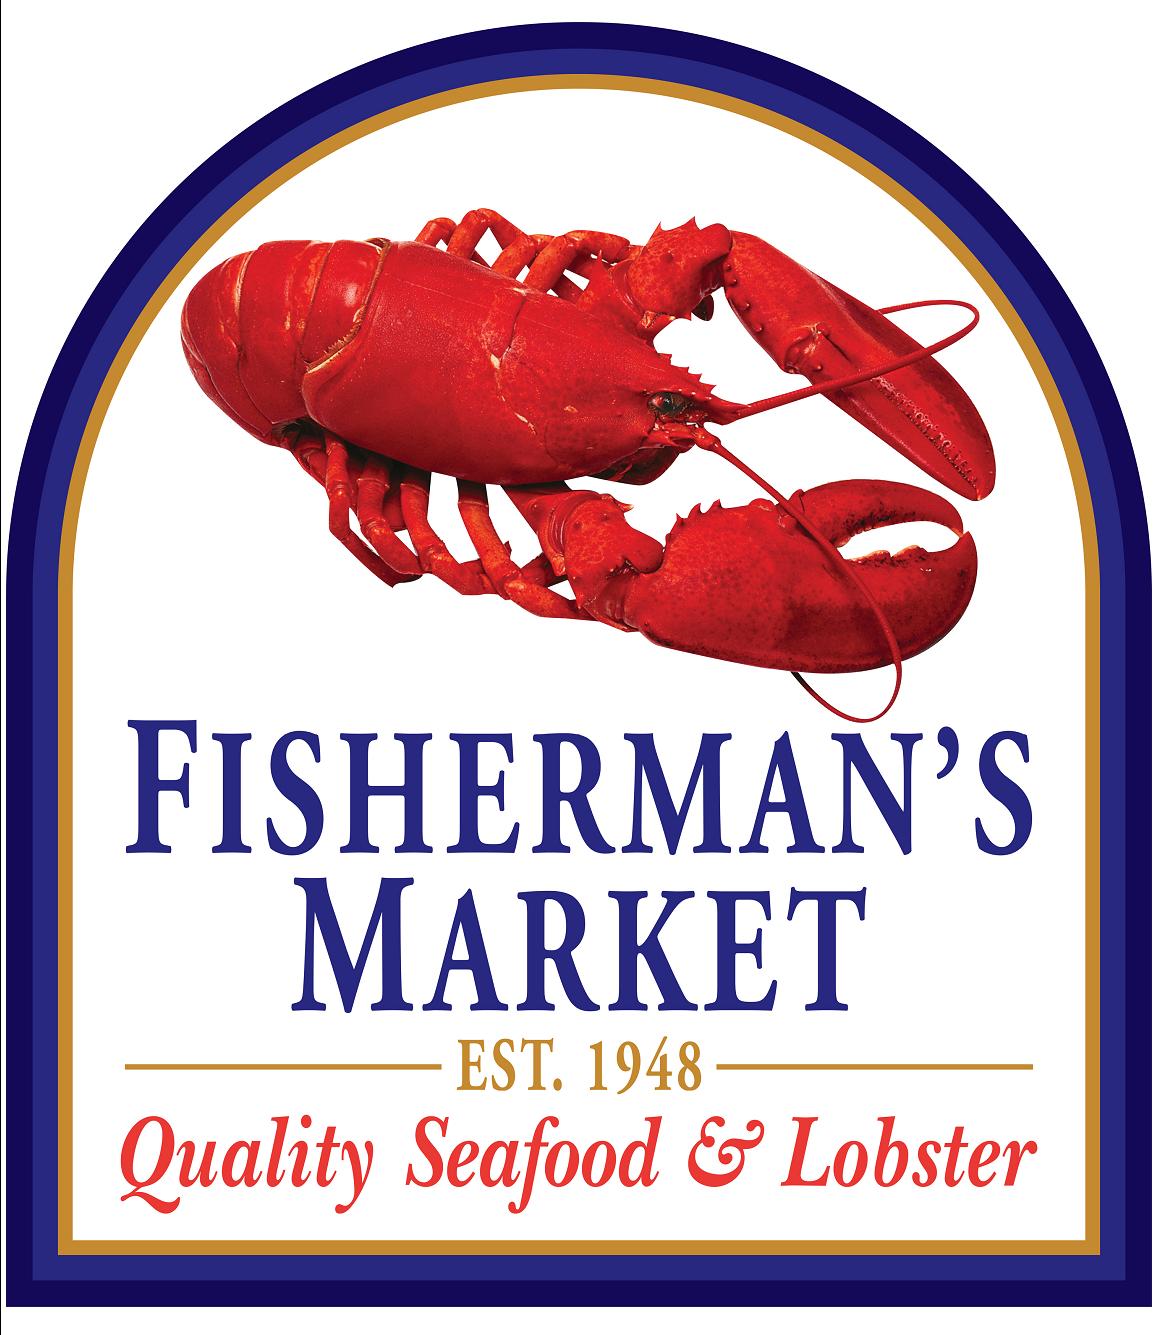 Fisherman's Market International Inc.